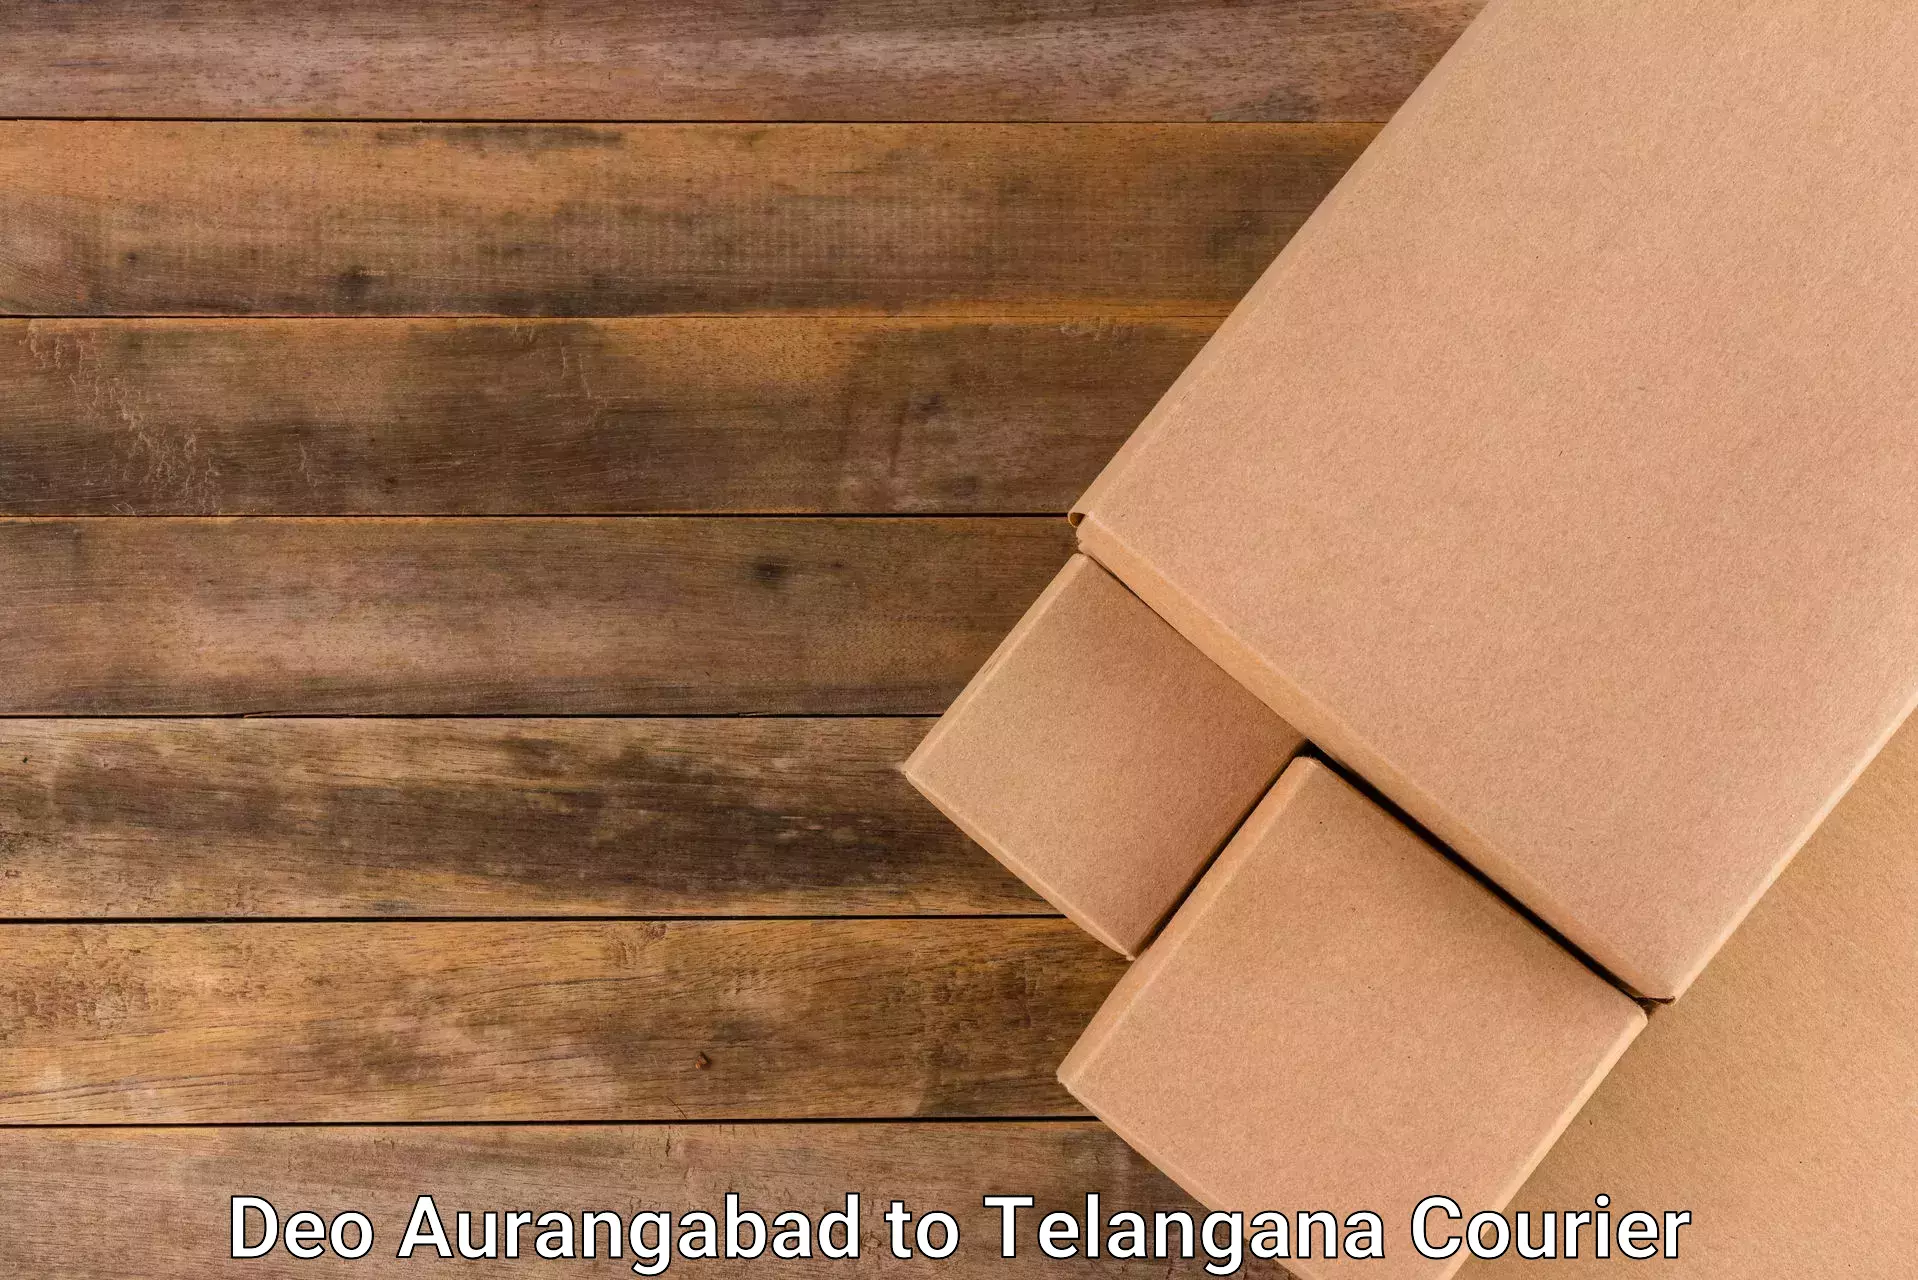 Affordable parcel service Deo Aurangabad to Mahabubabad